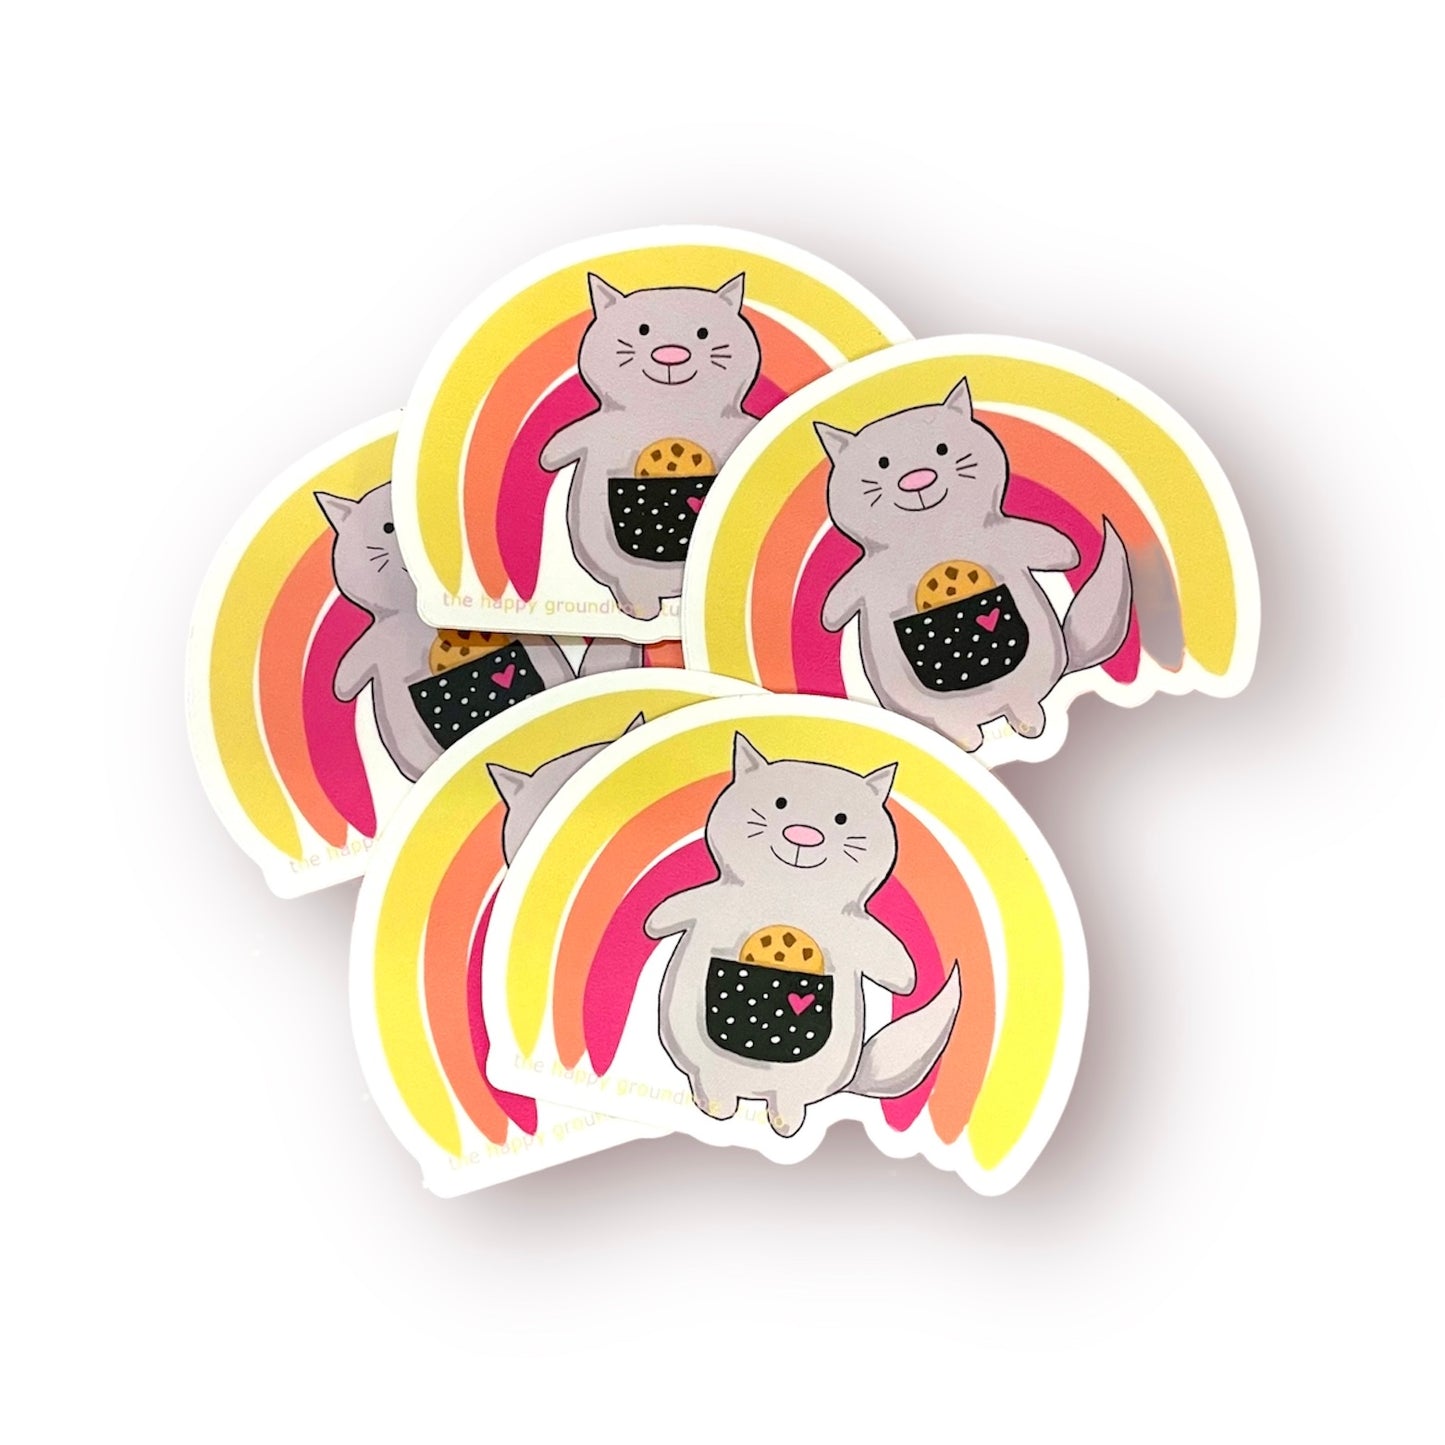 Kitty with Rainbow Sticker